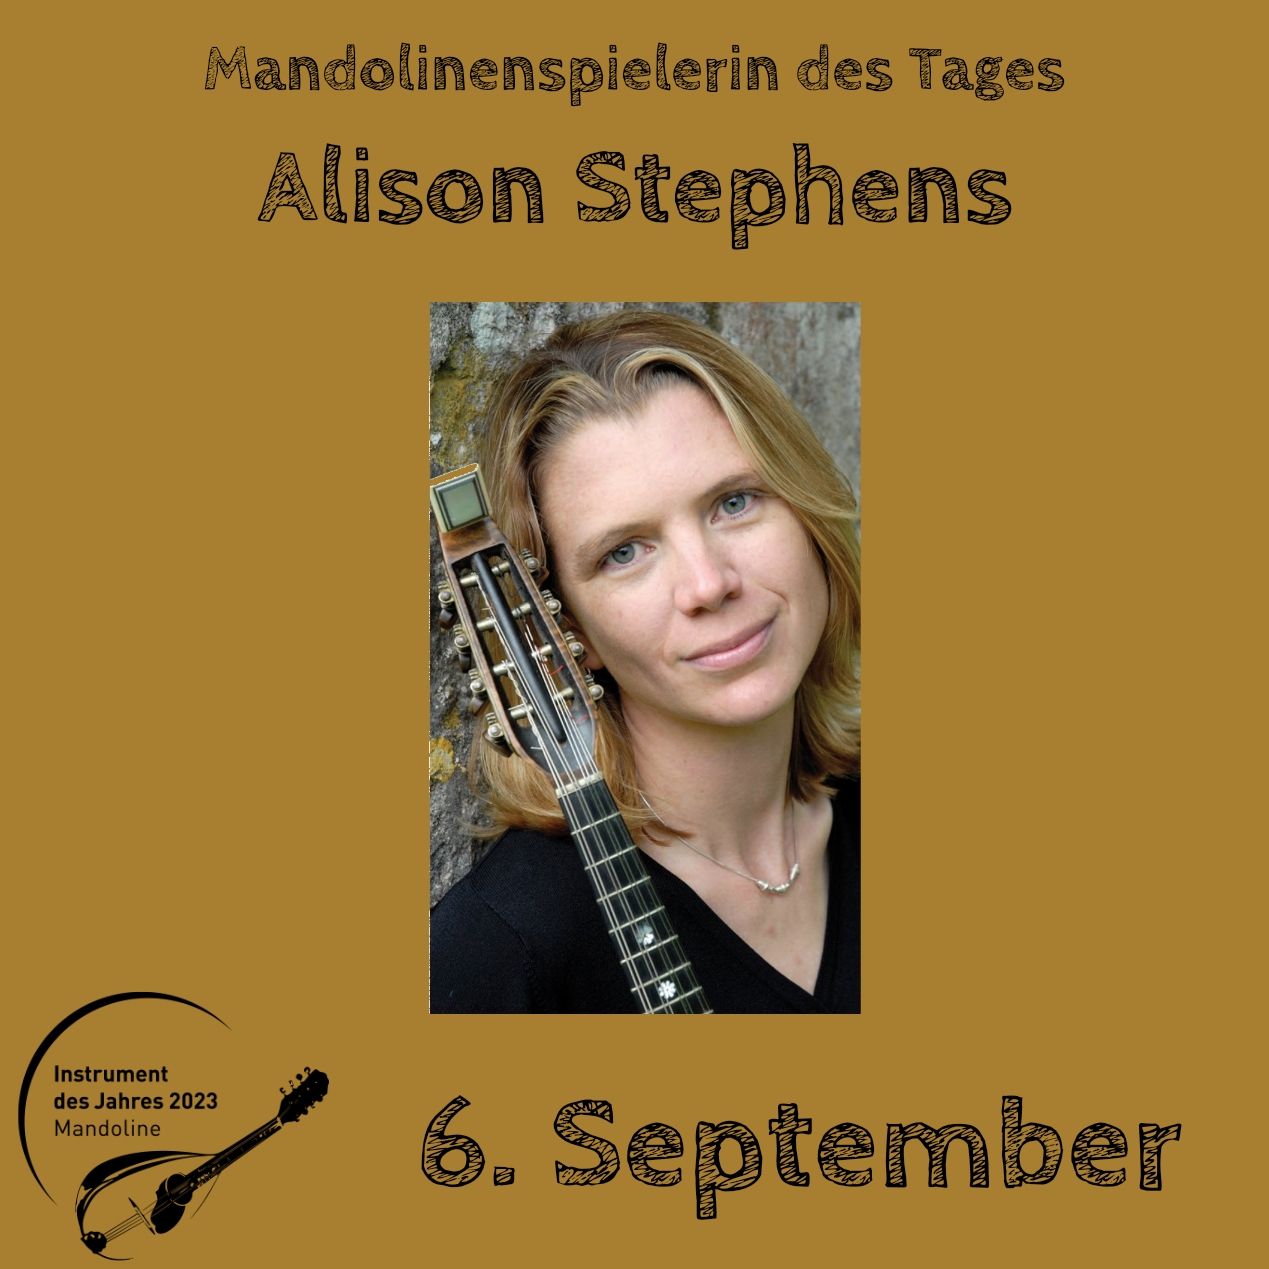 Alison Stephens Mandoline Instrument des Jahres 2023 Mandolinenspieler Mandolinenspielerin des Tages